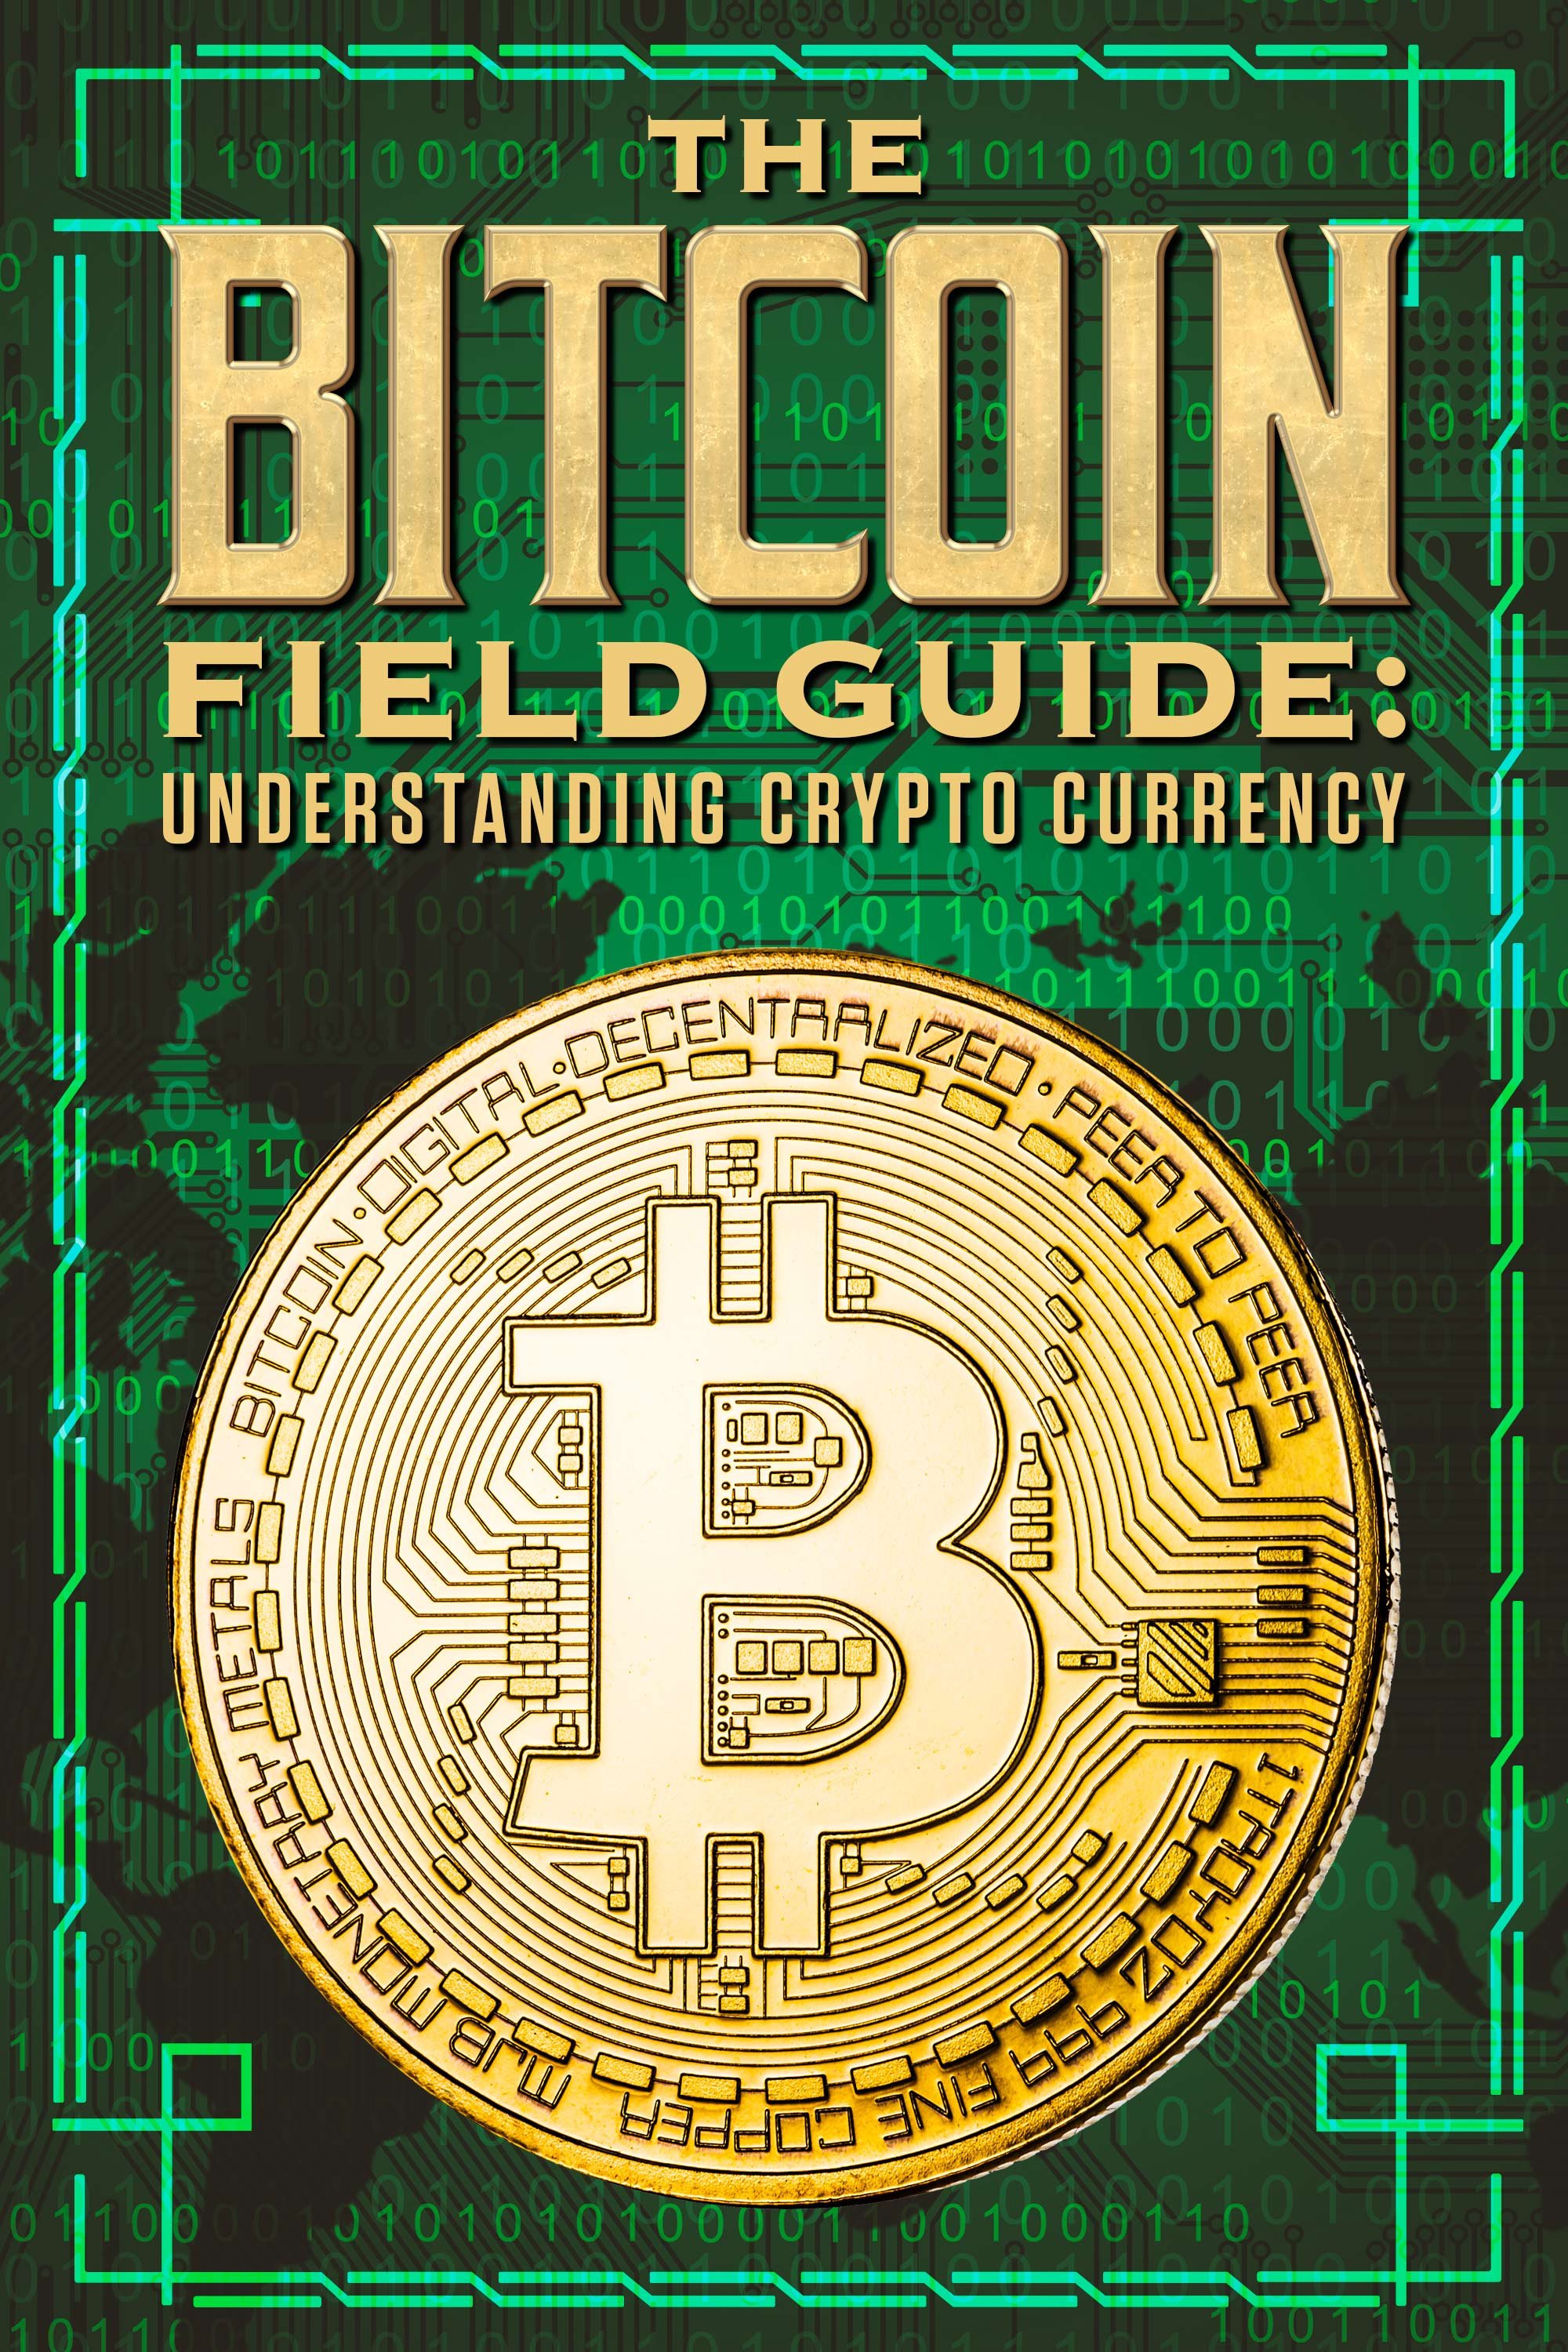 The Bitcoin Field Guide